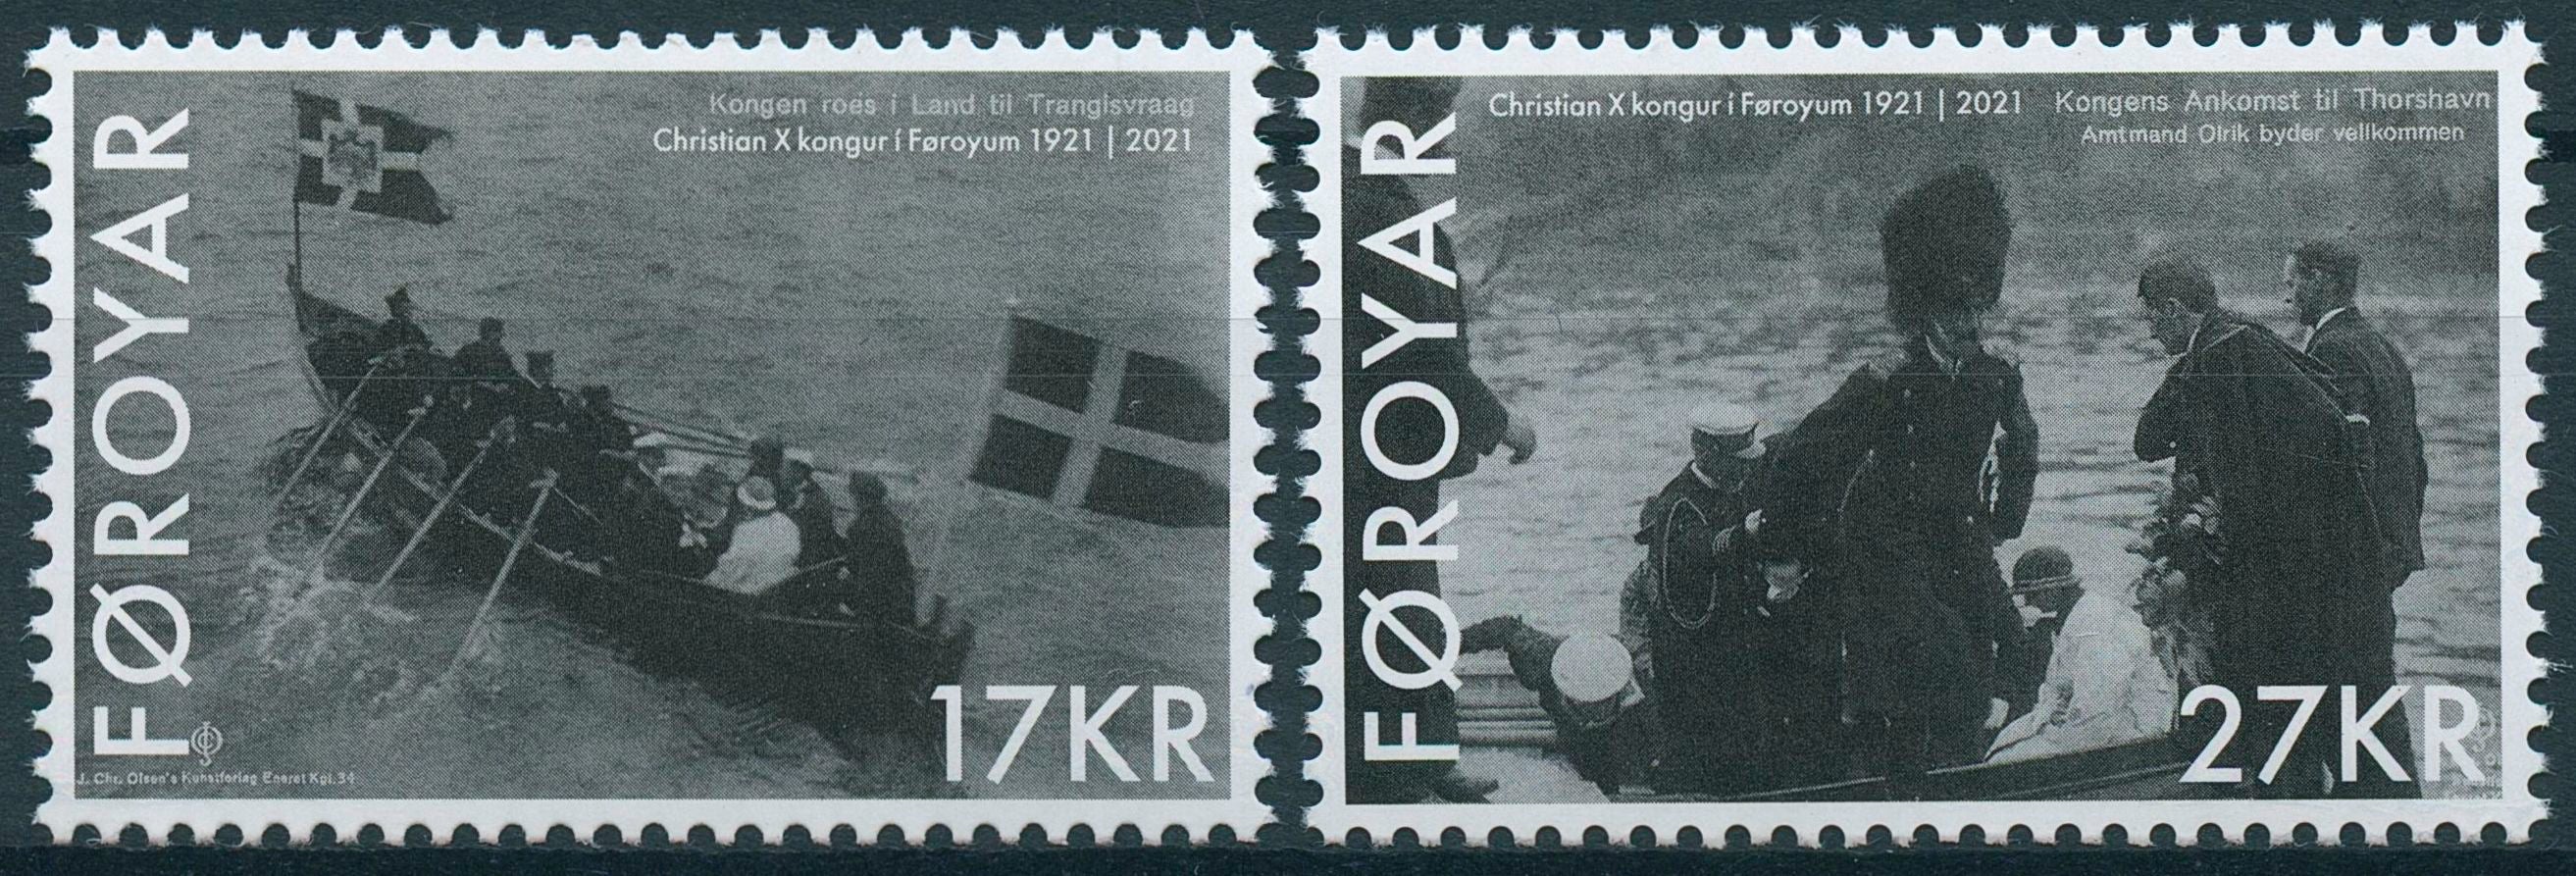 Faroes Faroe Islands Royalty Stamps 2021 MNH Royal Visit King Christian X Boats Flags 2v Set